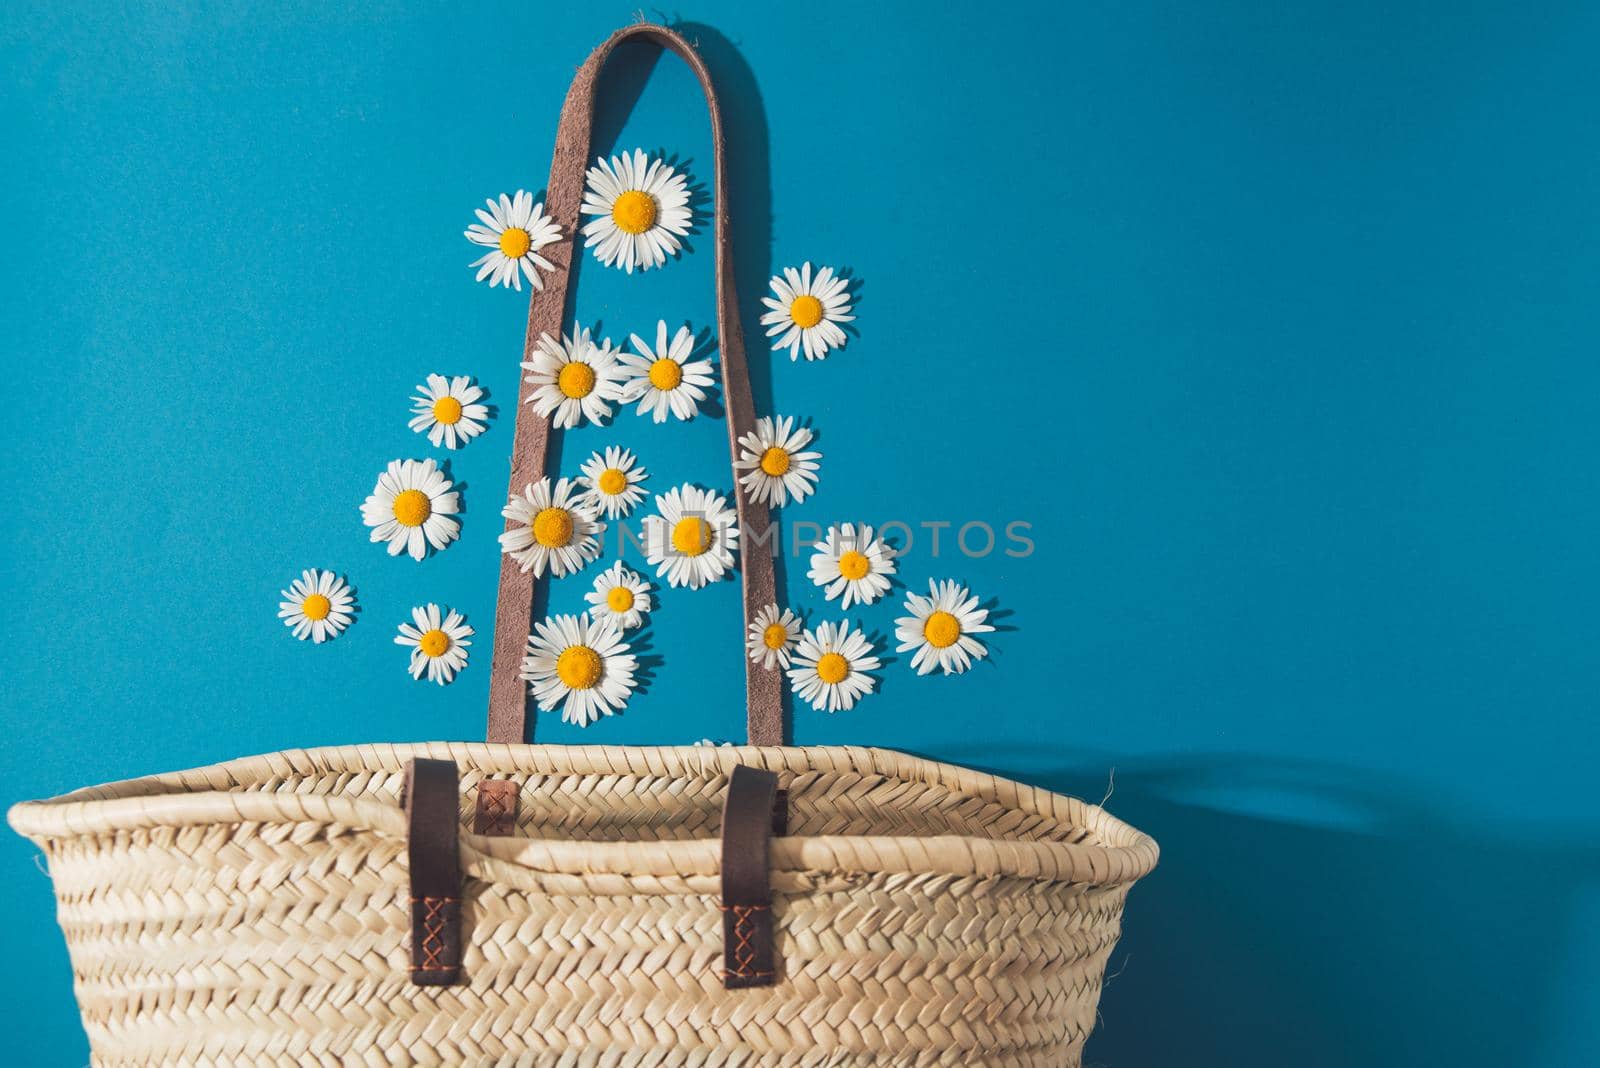 daisies fall into a straw bag by maramorosz